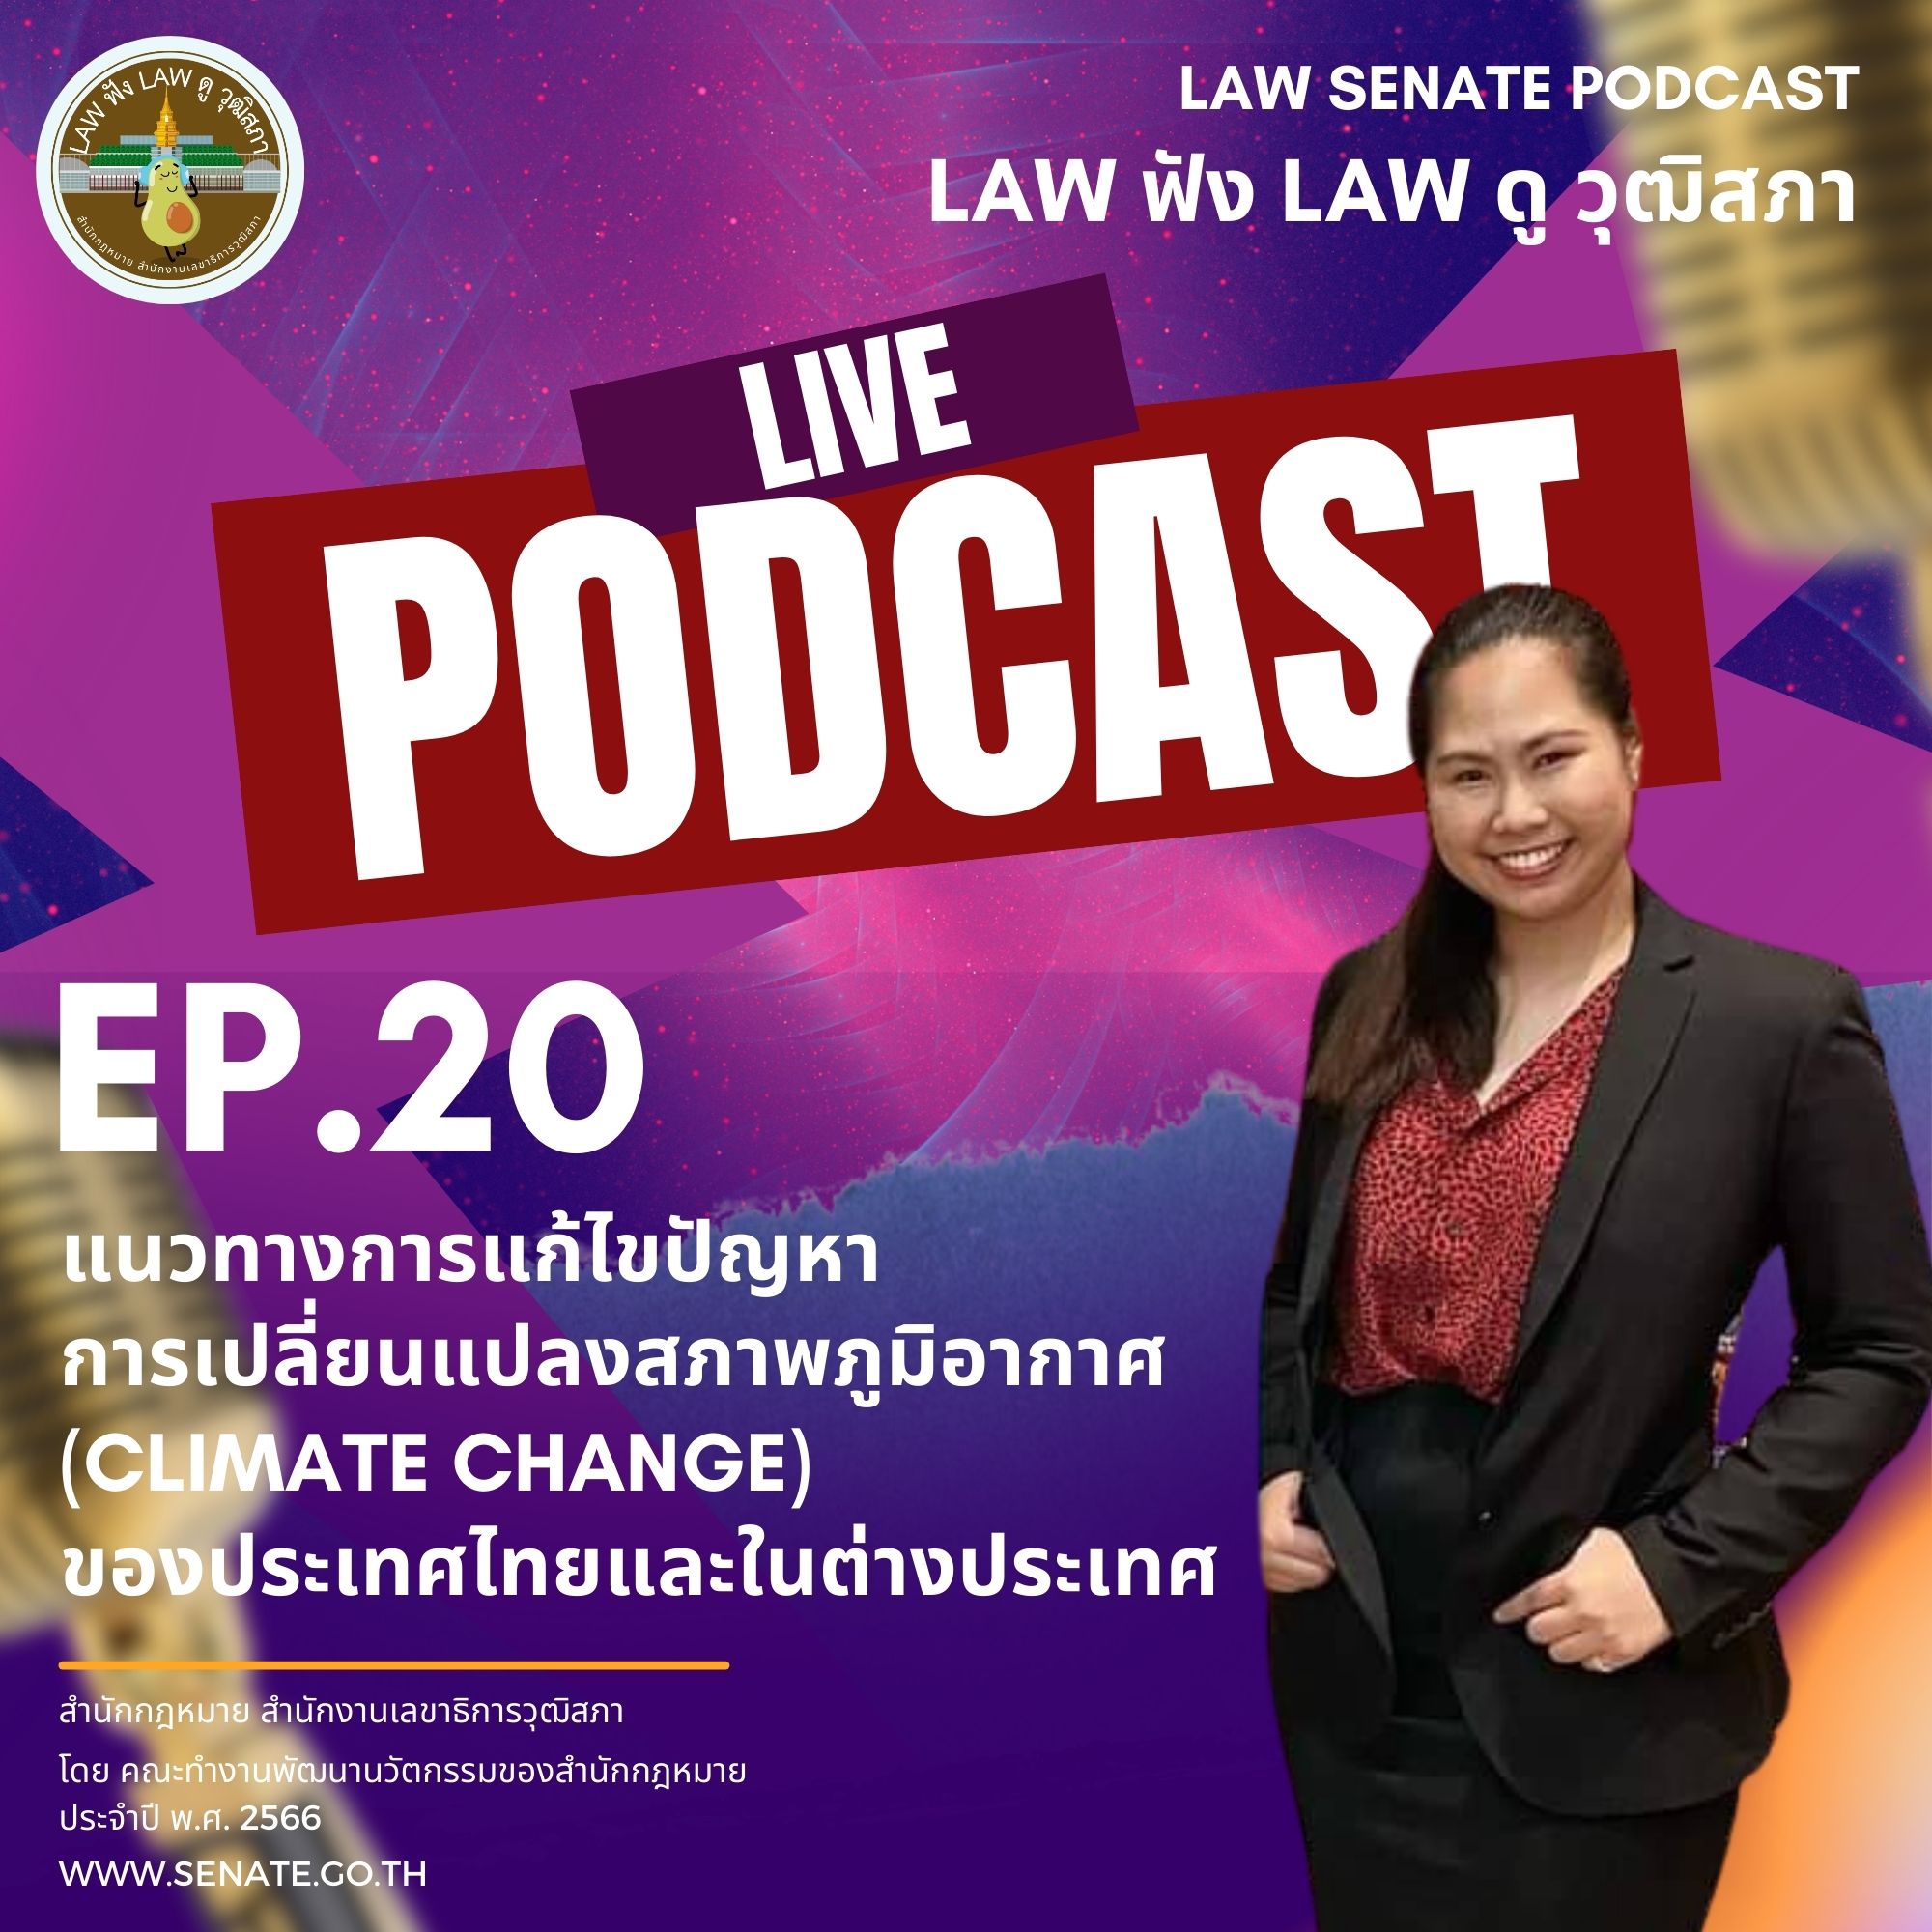 EP.20 แนวทางการแก้ไขปัญหาการเปลี่ยนแปลงสภาพภูมิอากาศ (Climate Change) ของประเทศไทยและในต่างประเทศ